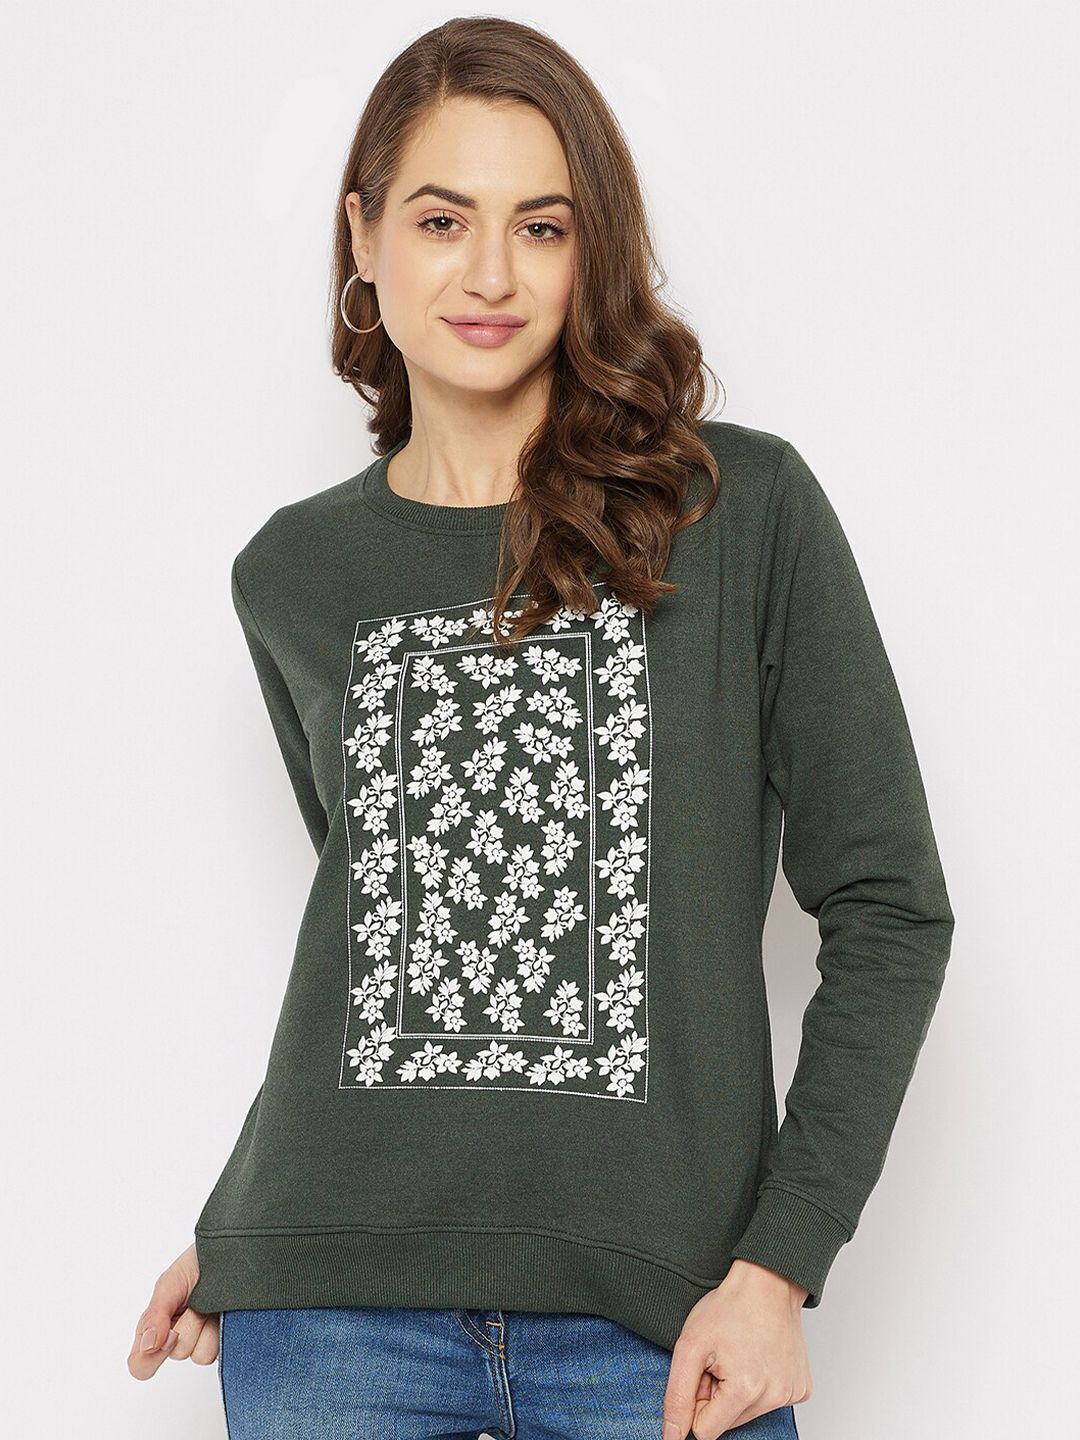 HARBORNBAY Women Olive Green & White Printed Sweatshirt Price in India